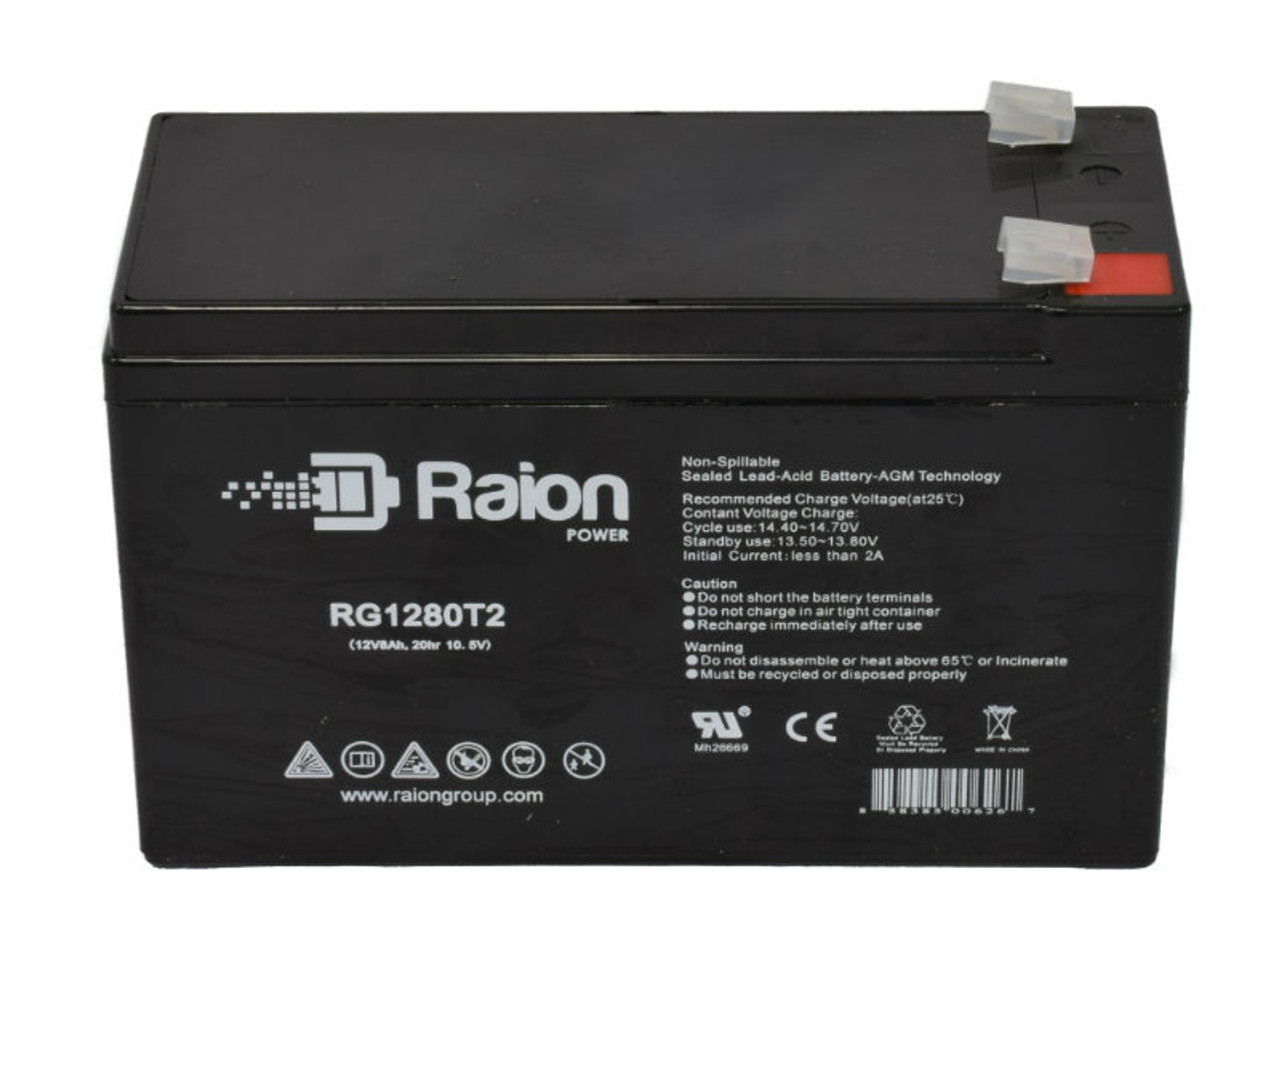 Raion Power Replacement 12V 8Ah Emergency Light Battery for Teledyne 118-0007 - 1 Pack